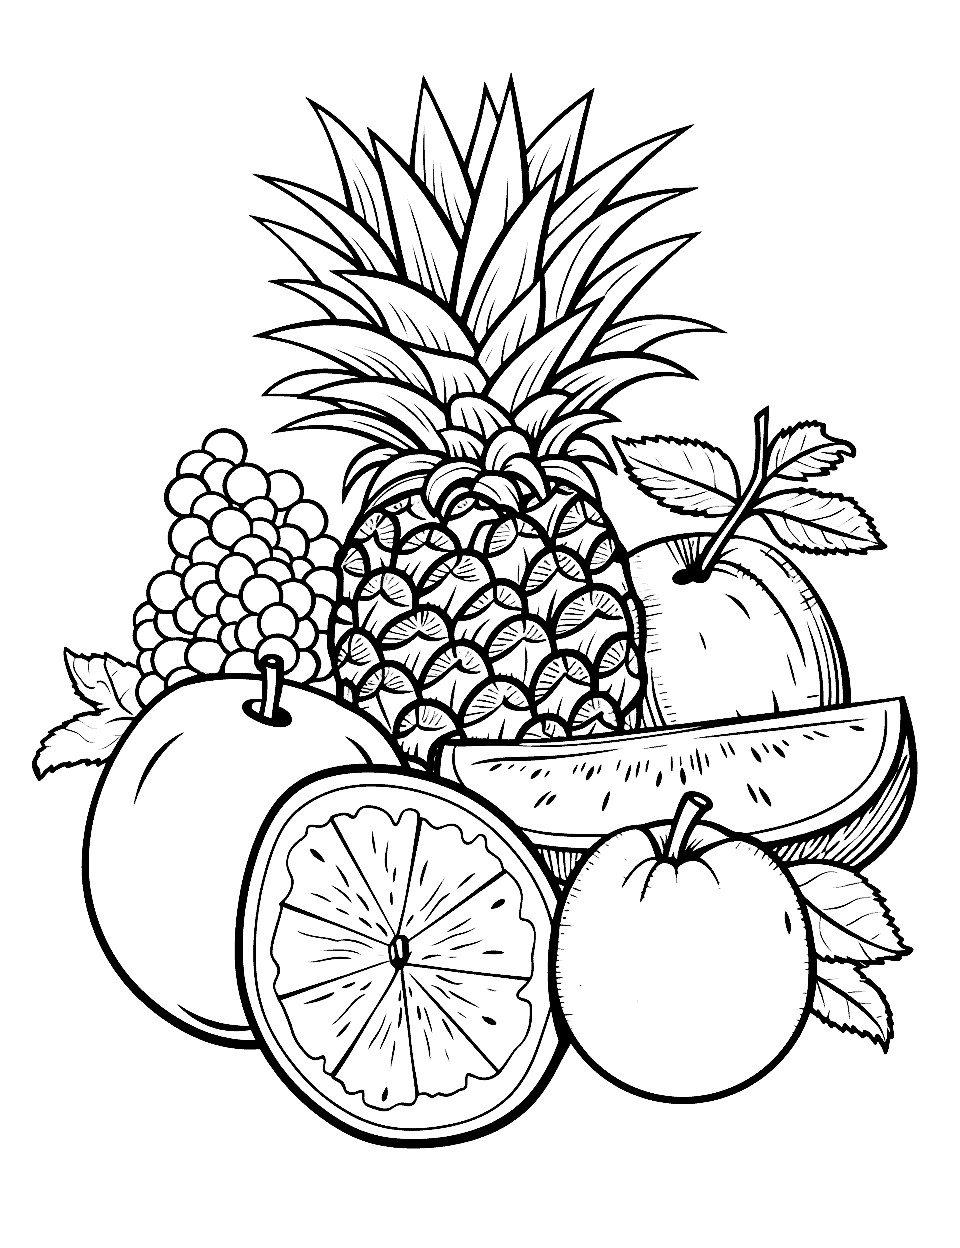 Juicy Fruit Jamboree Coloring Page - Various juicy fruits like watermelon, orange, and grapes.